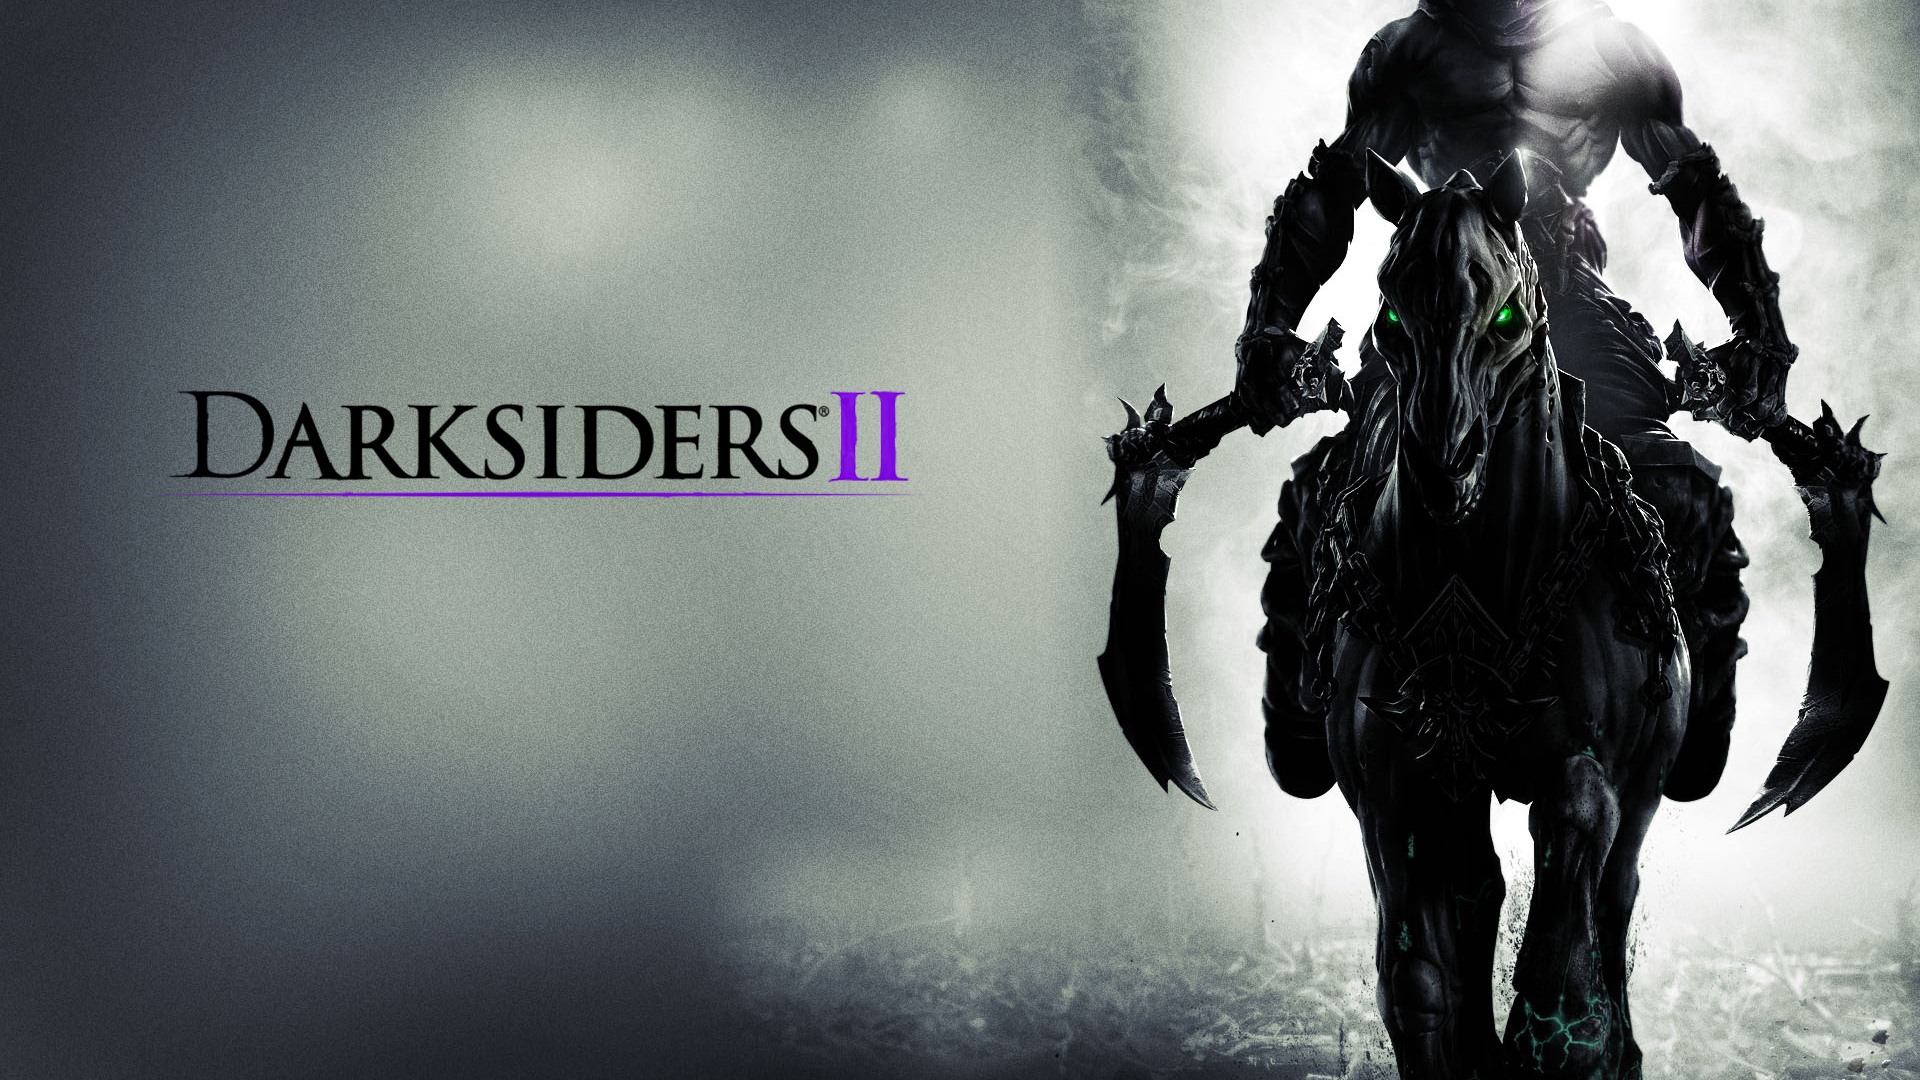 Darksiders II 暗黑血统 2 游戏高清壁纸4 - 1920x1080